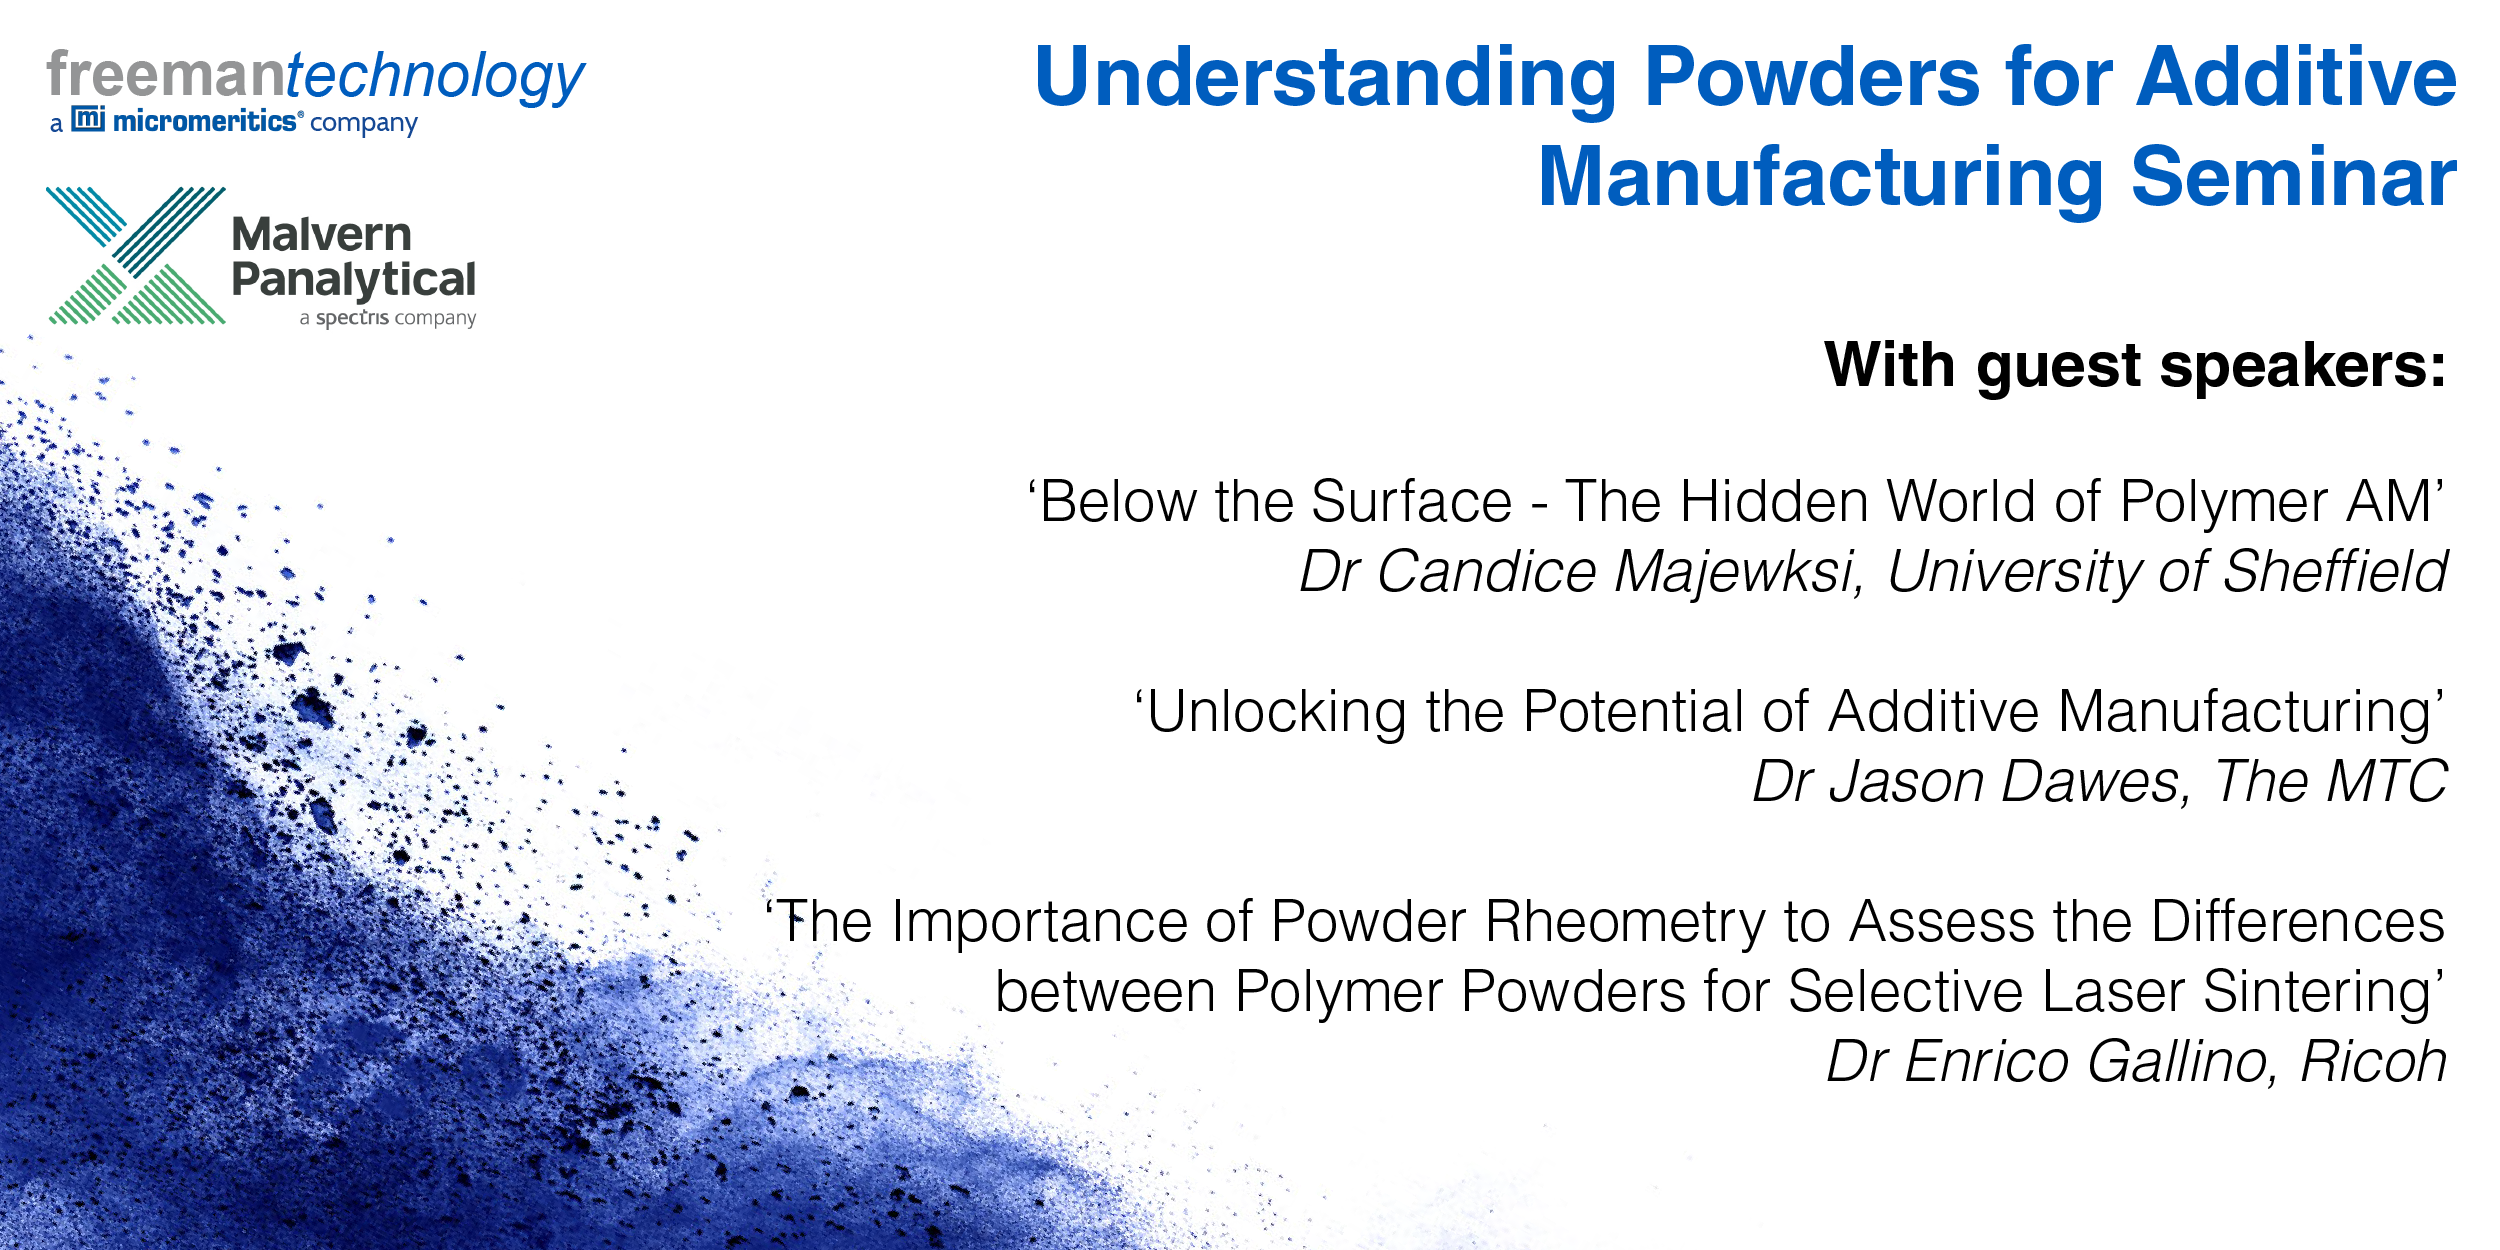 Understanding powders for additive manufacturing seminar (24 September 2019)